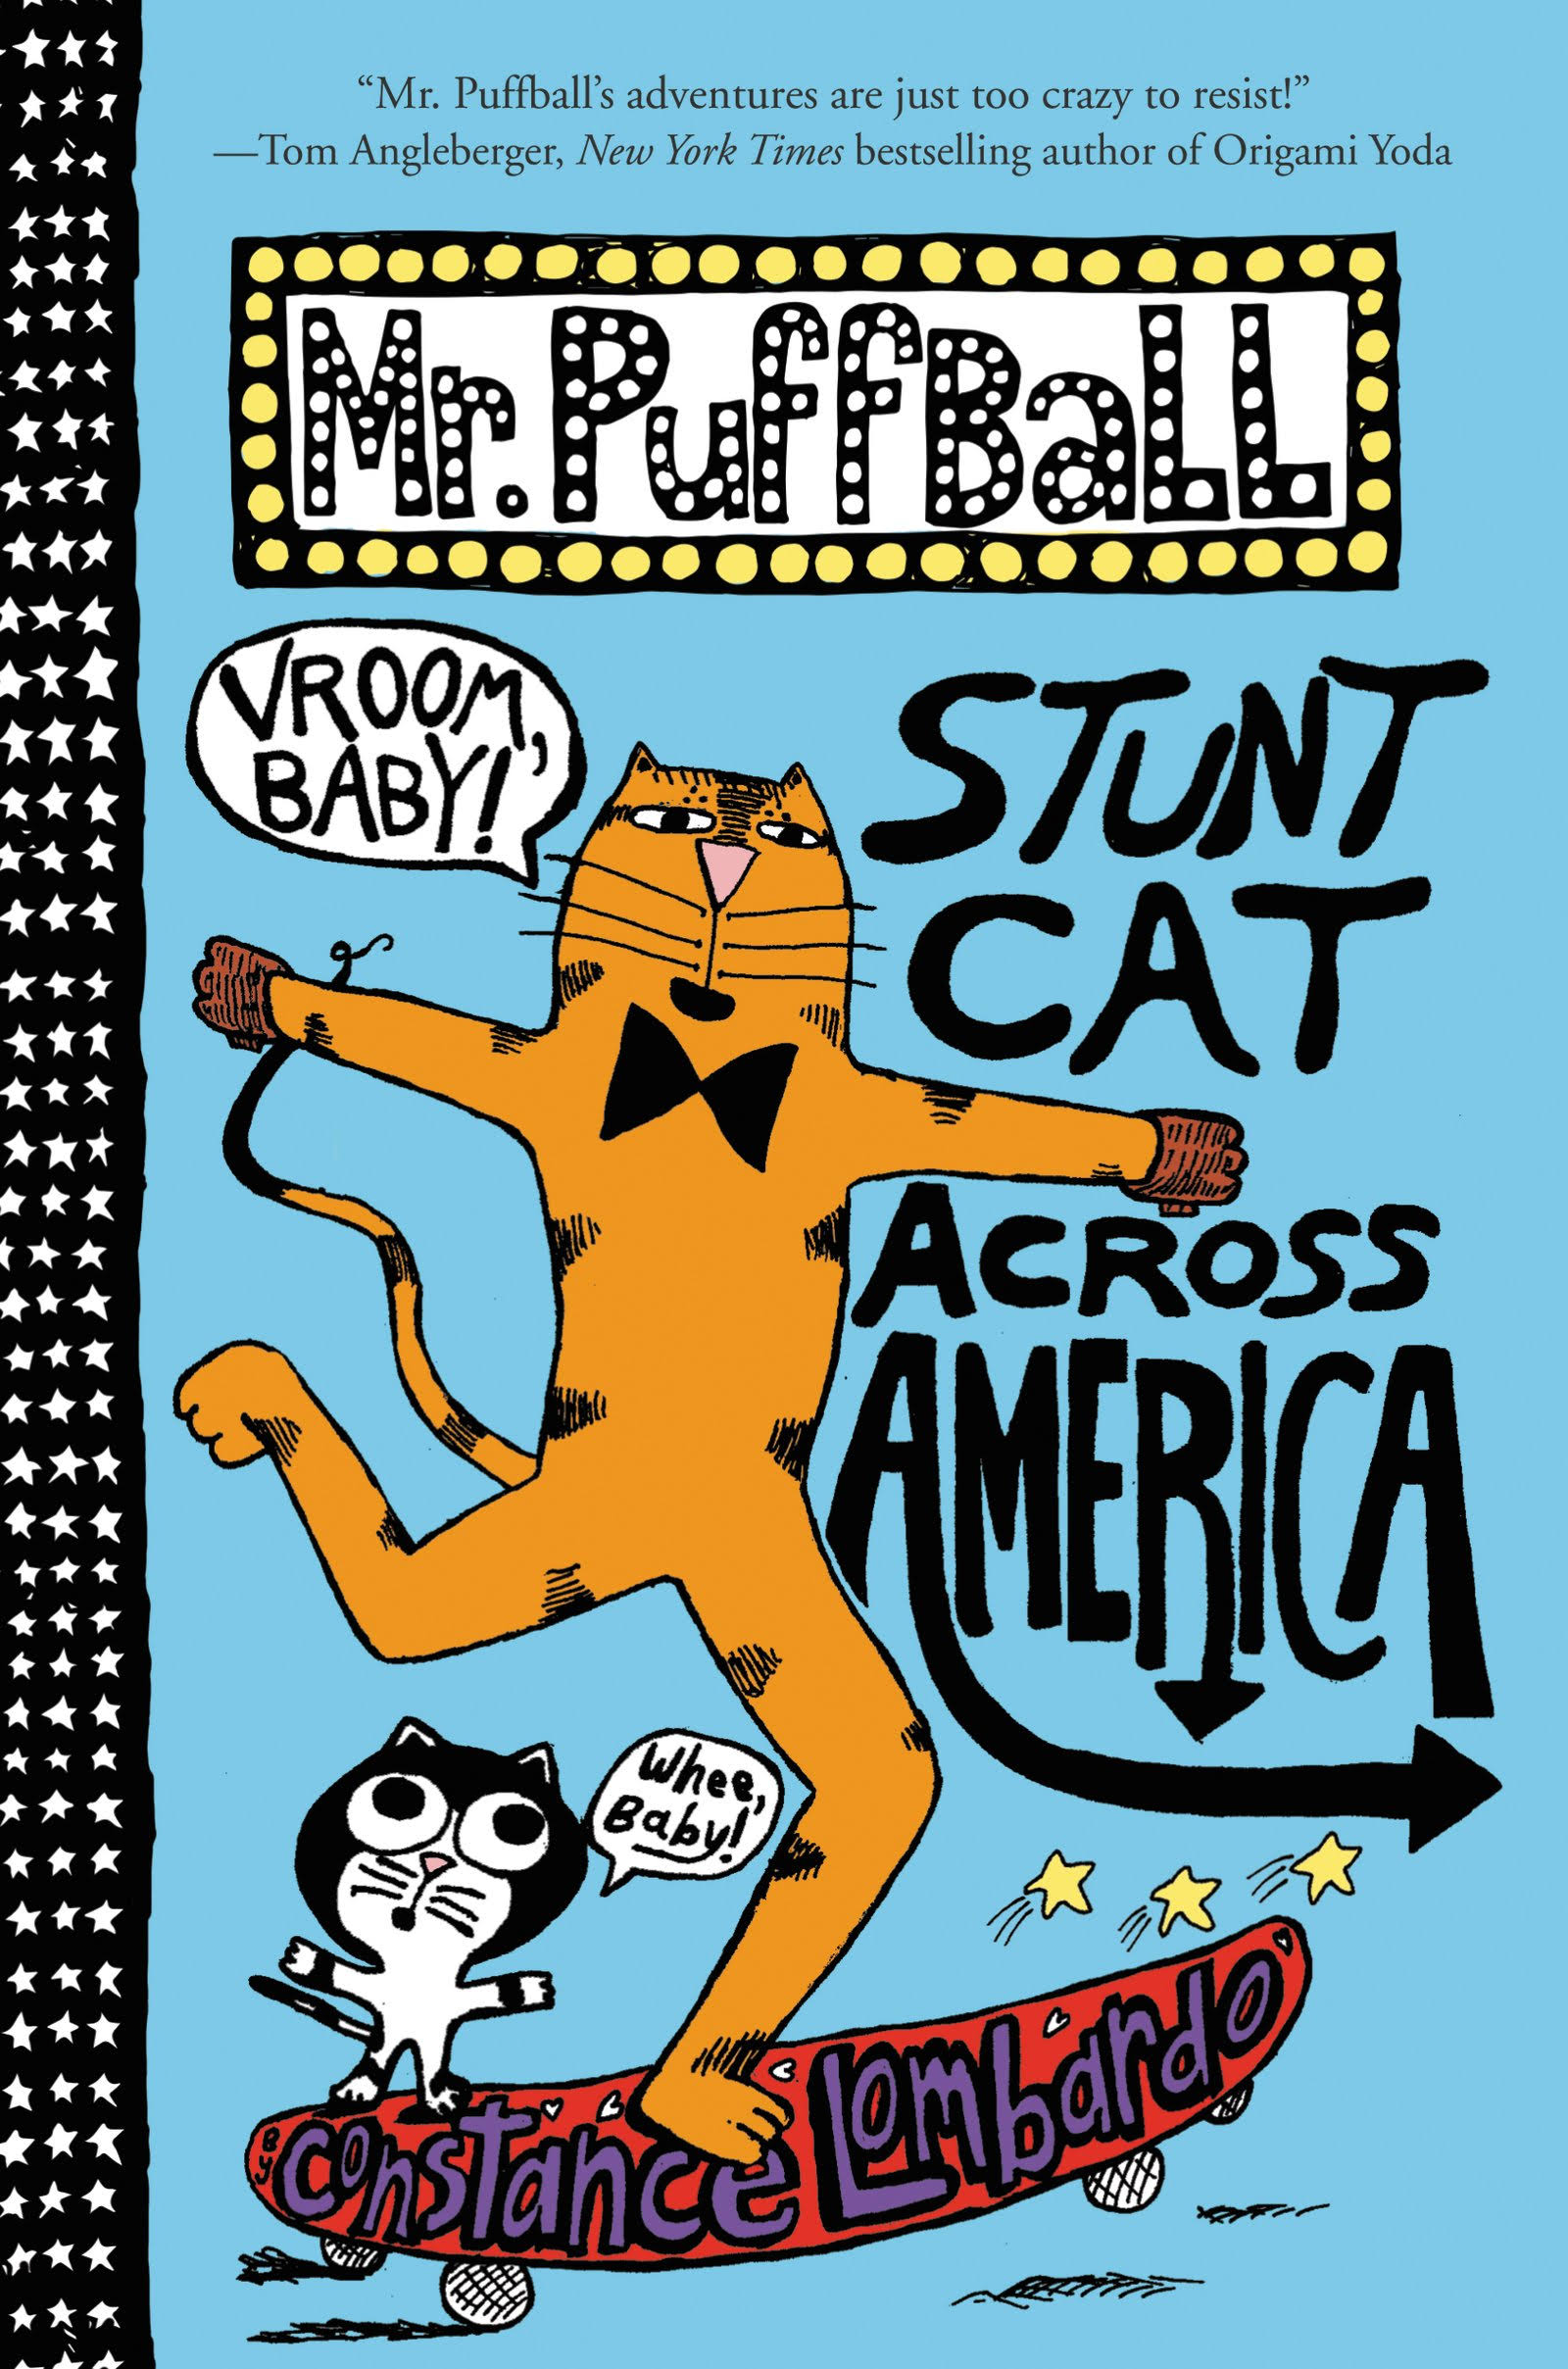 Mr. Puffball: Stunt Cat Across America [Book]